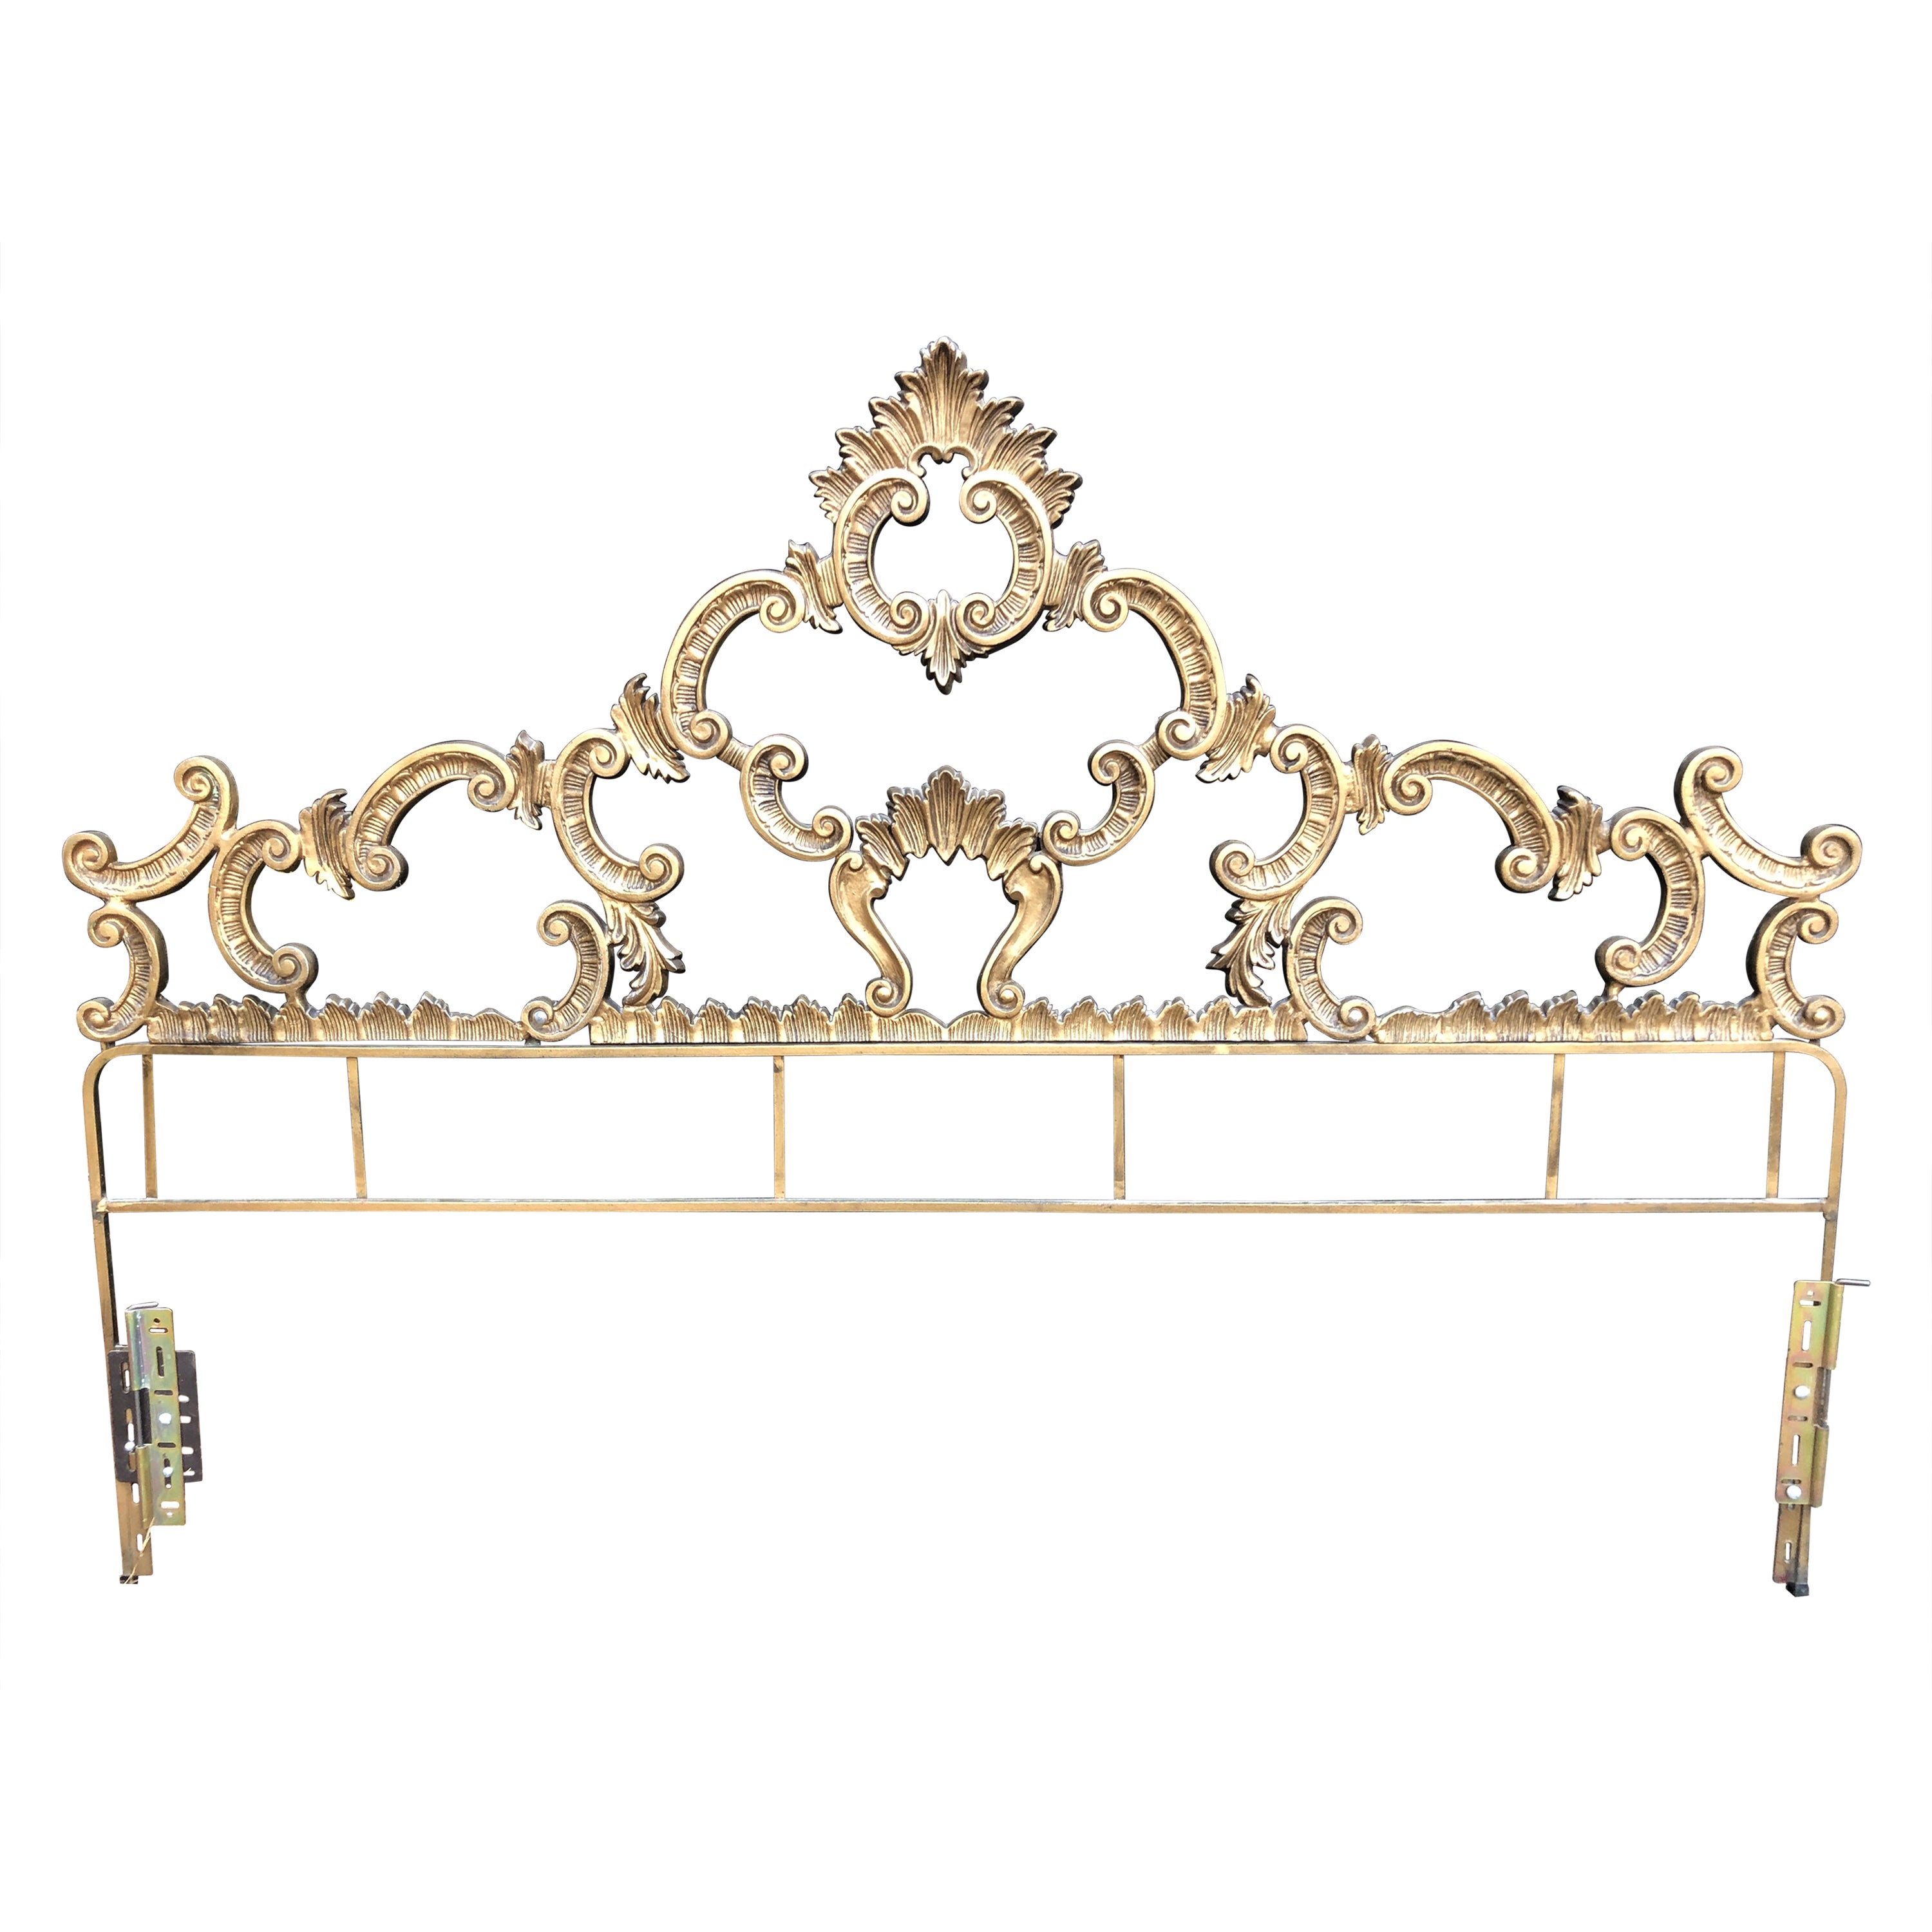 Stunning Hollywood Regency Ornate Gold Iron Kingsize Headboard Bed For Sale